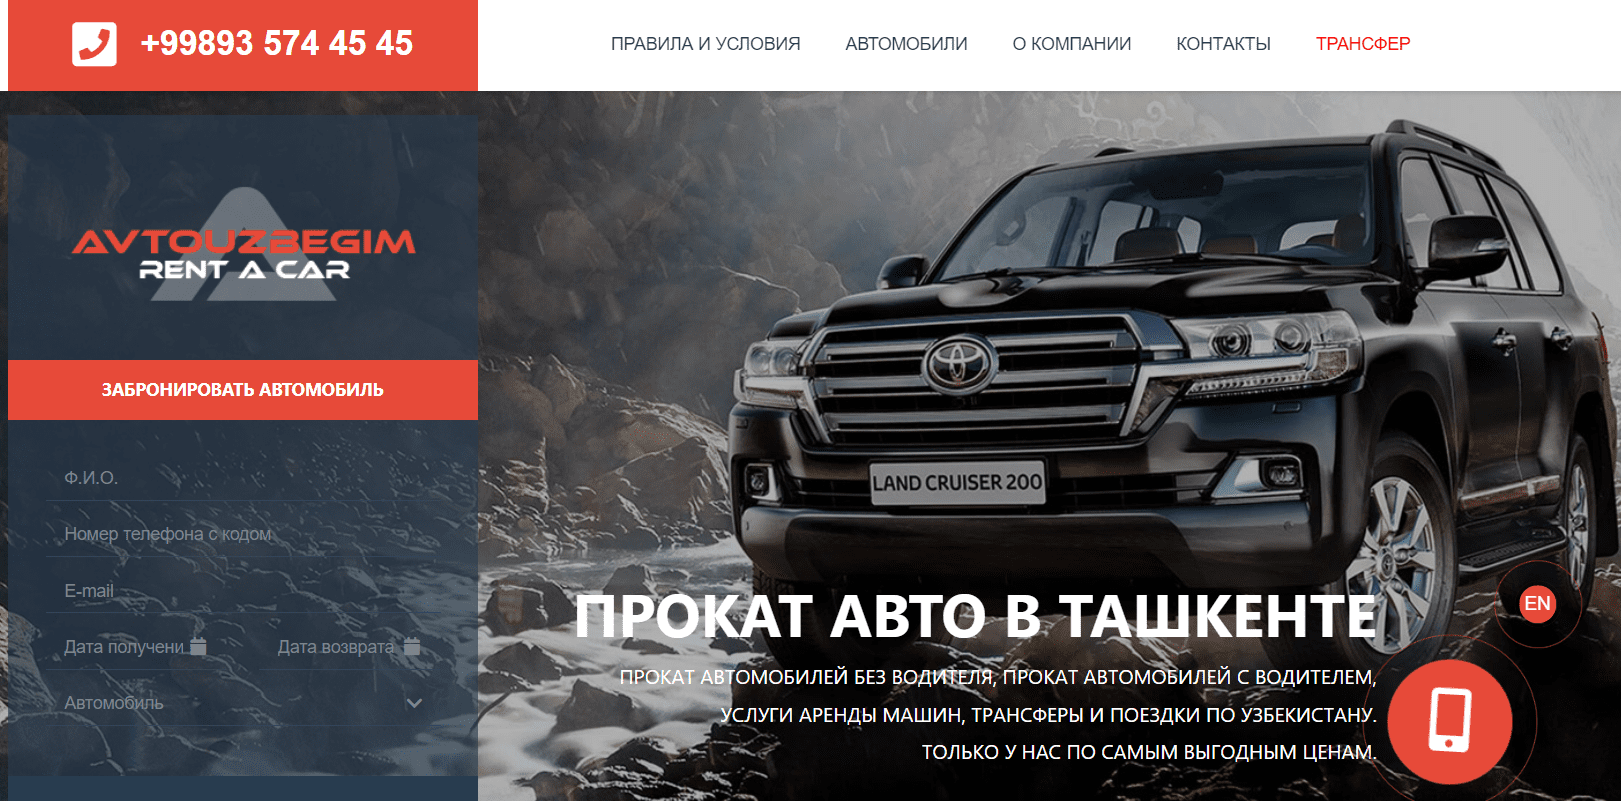 AVTOUZBEGIM (autoprokat.uz) - официальный сайт